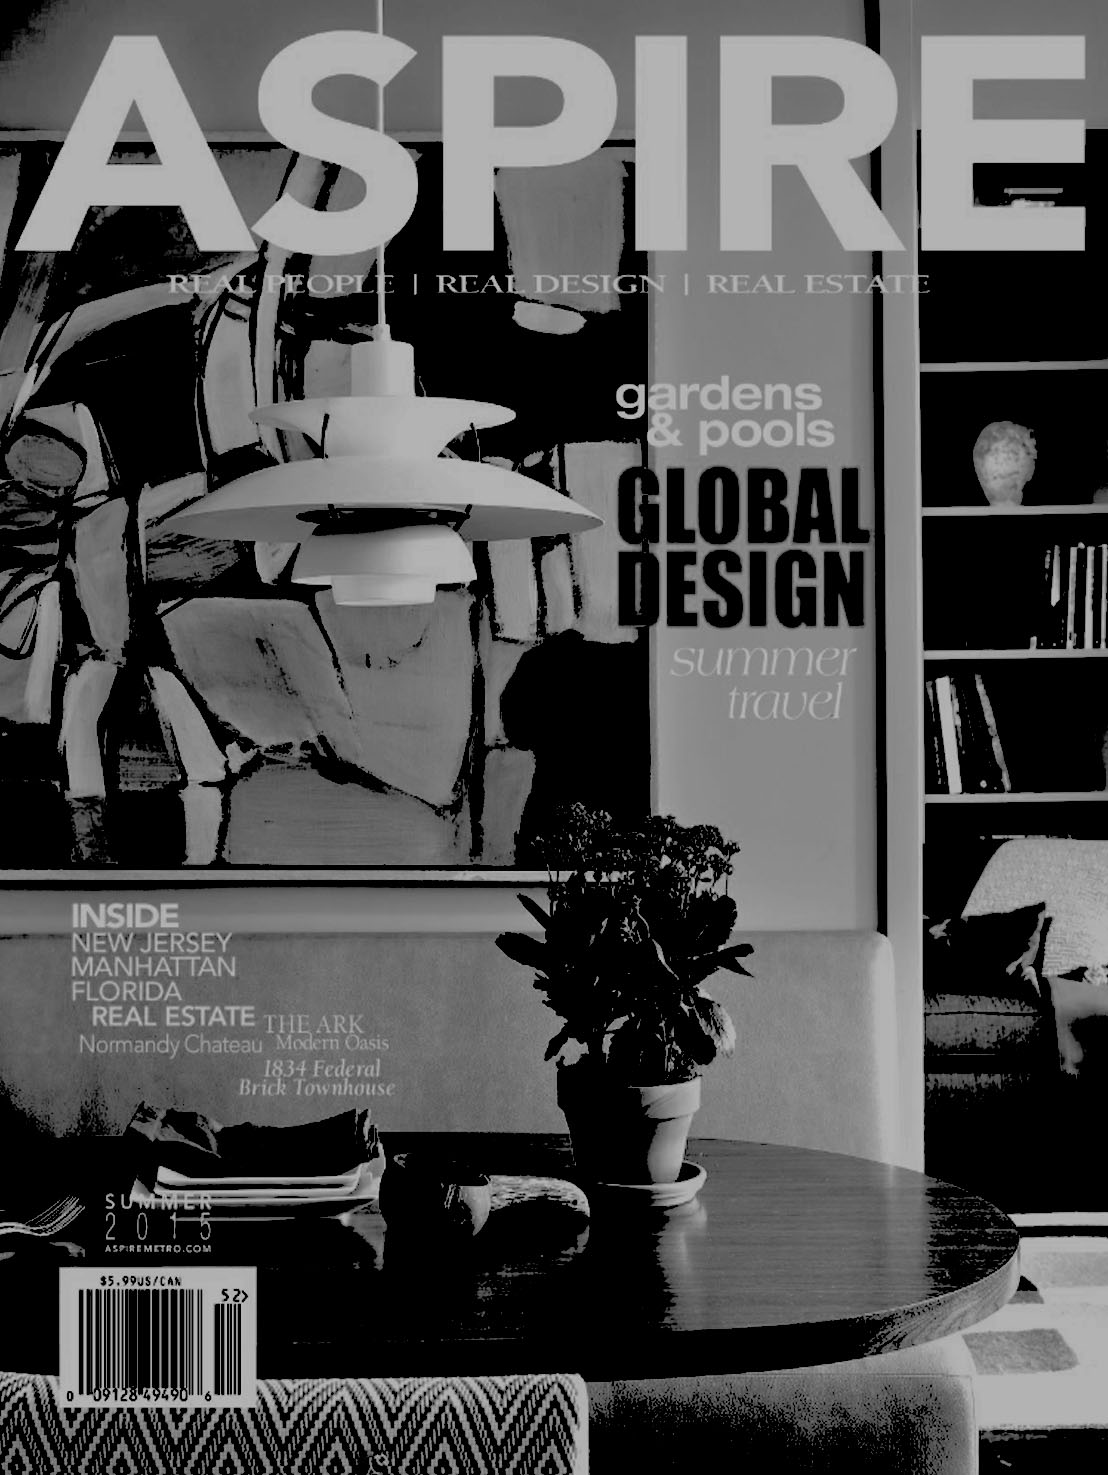 Joe Ginsberg is among the top interior design firms.